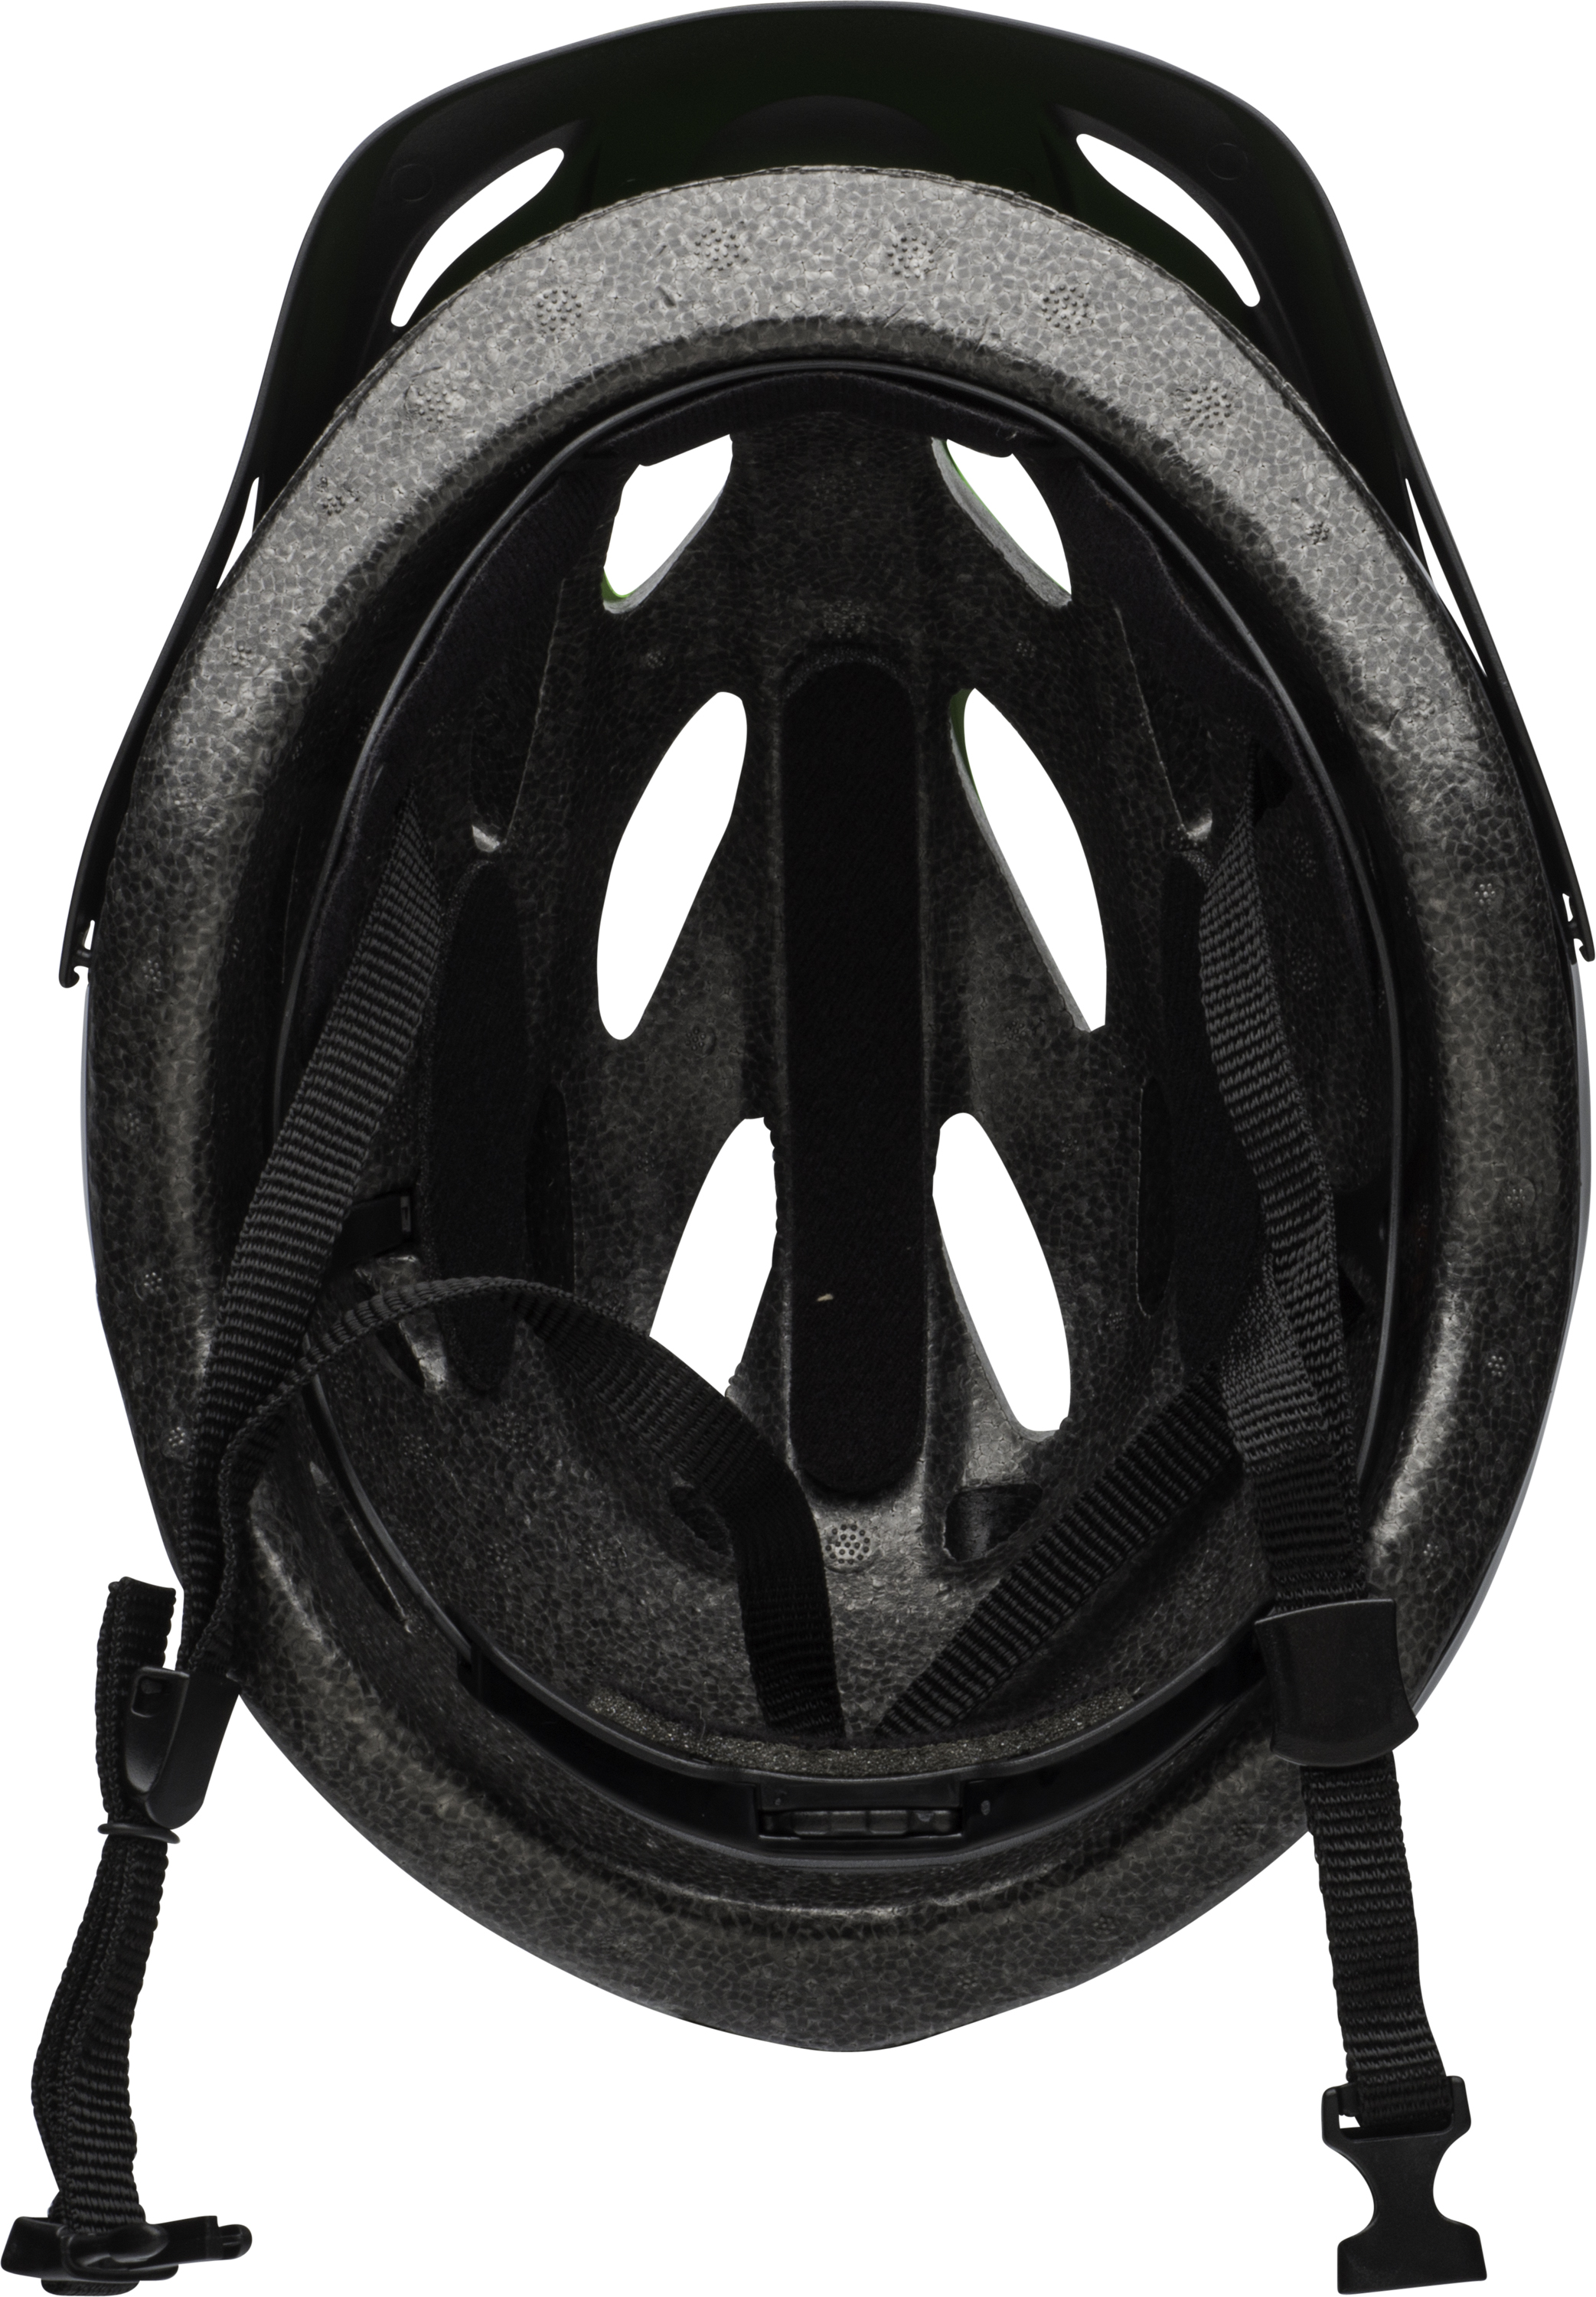 Bell Axle Bike Helmet, Black/Green, Adult 14+ (54-61cm) - image 3 of 9